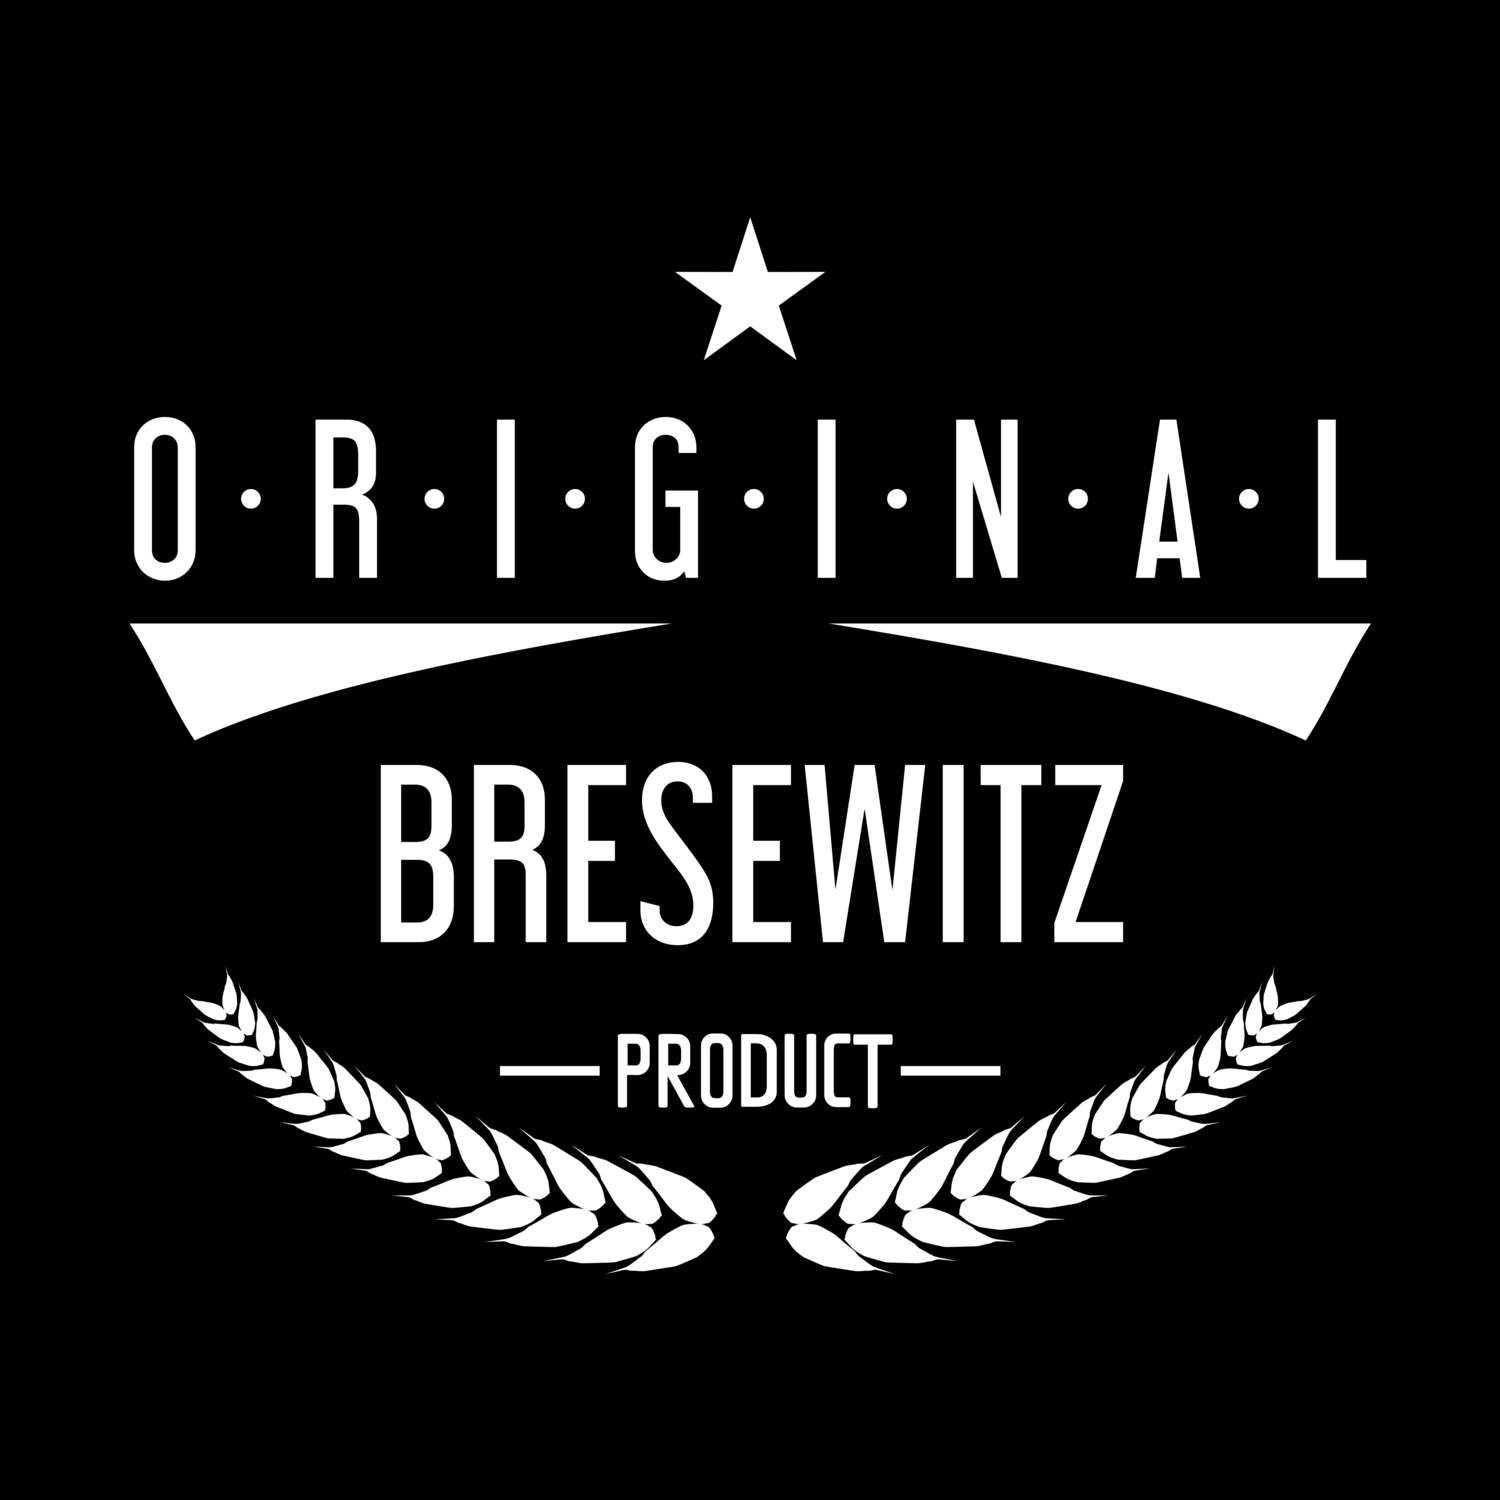 Bresewitz T-Shirt »Original Product«